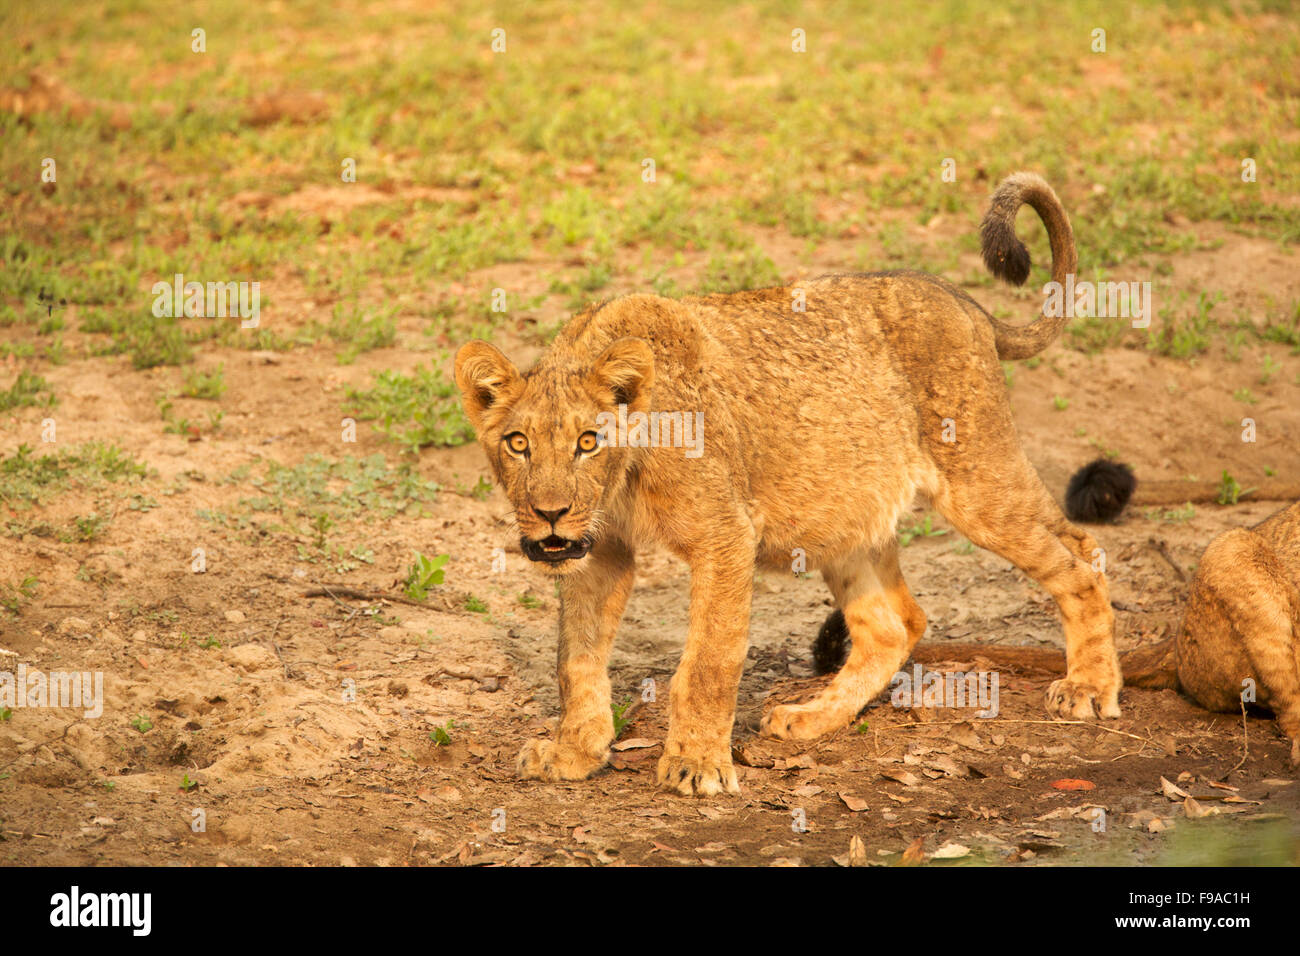 Lion cub standing at a watering hole, Mana Pools, Zimbabwe Stock Photo